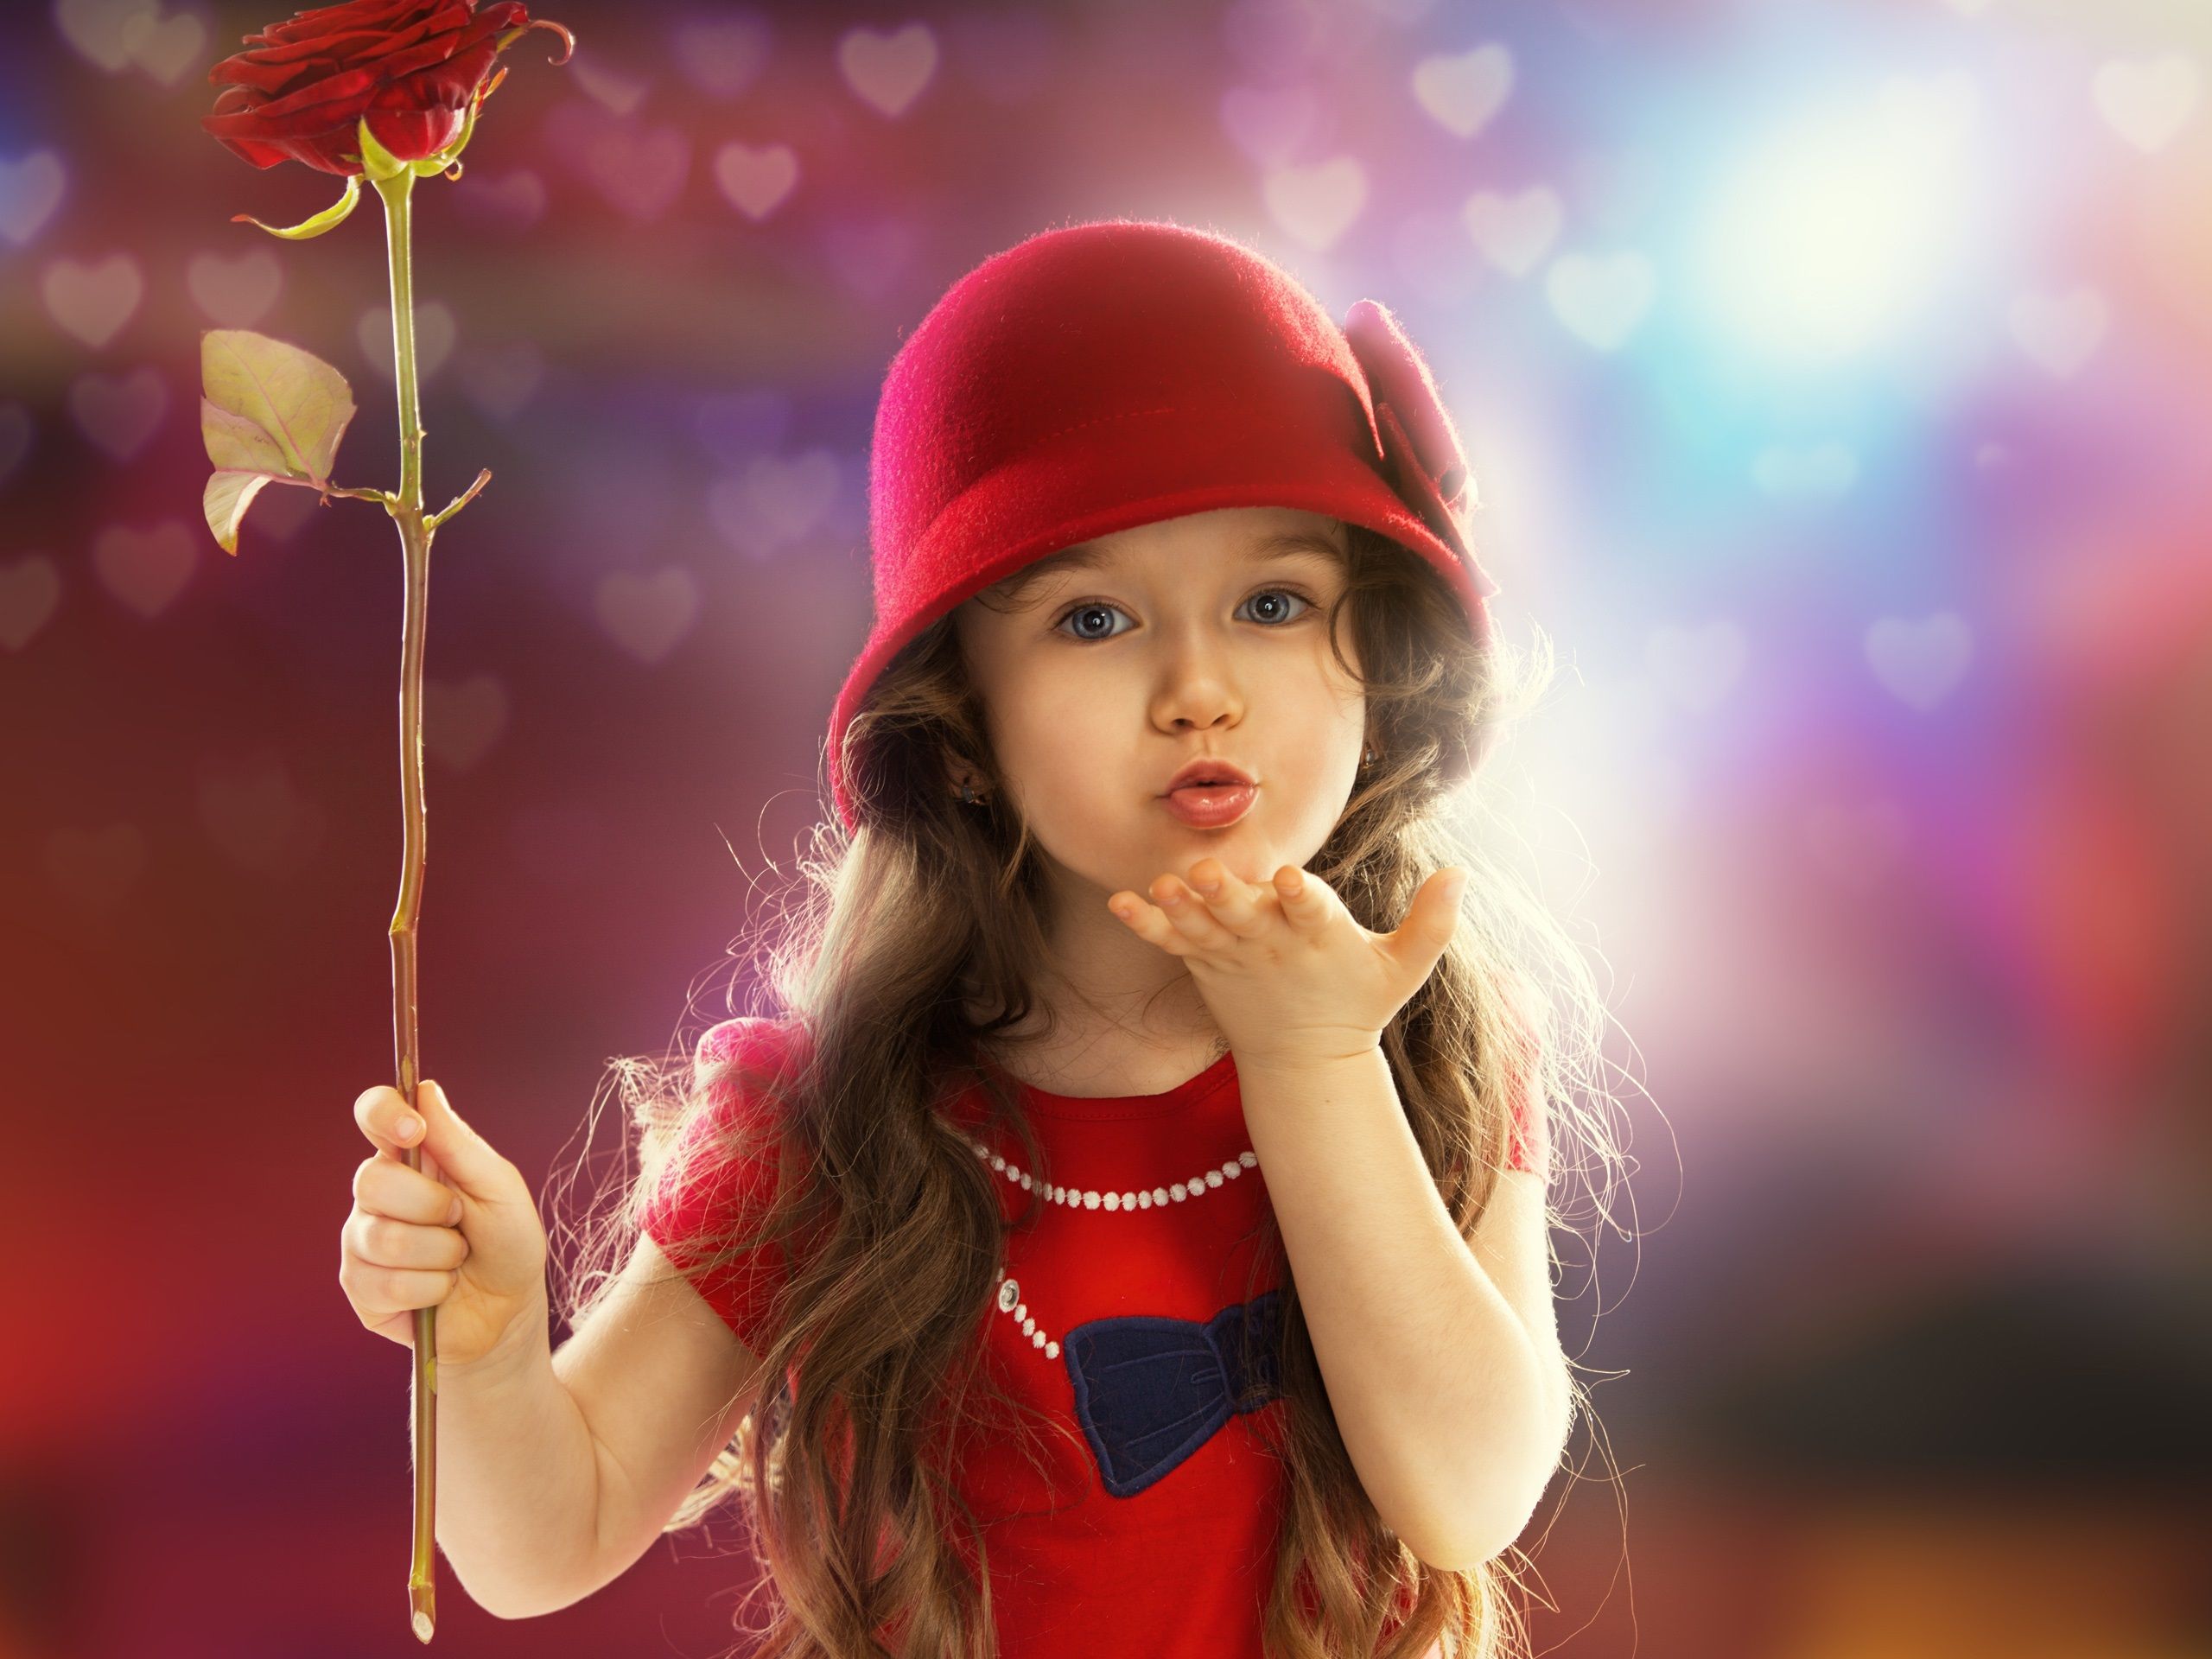 Cute red dress little girl, child, sweet kiss Wallpaperx1920 resolution wallpaper download. Cute baby girl wallpaper, Cute red dresses, Cute baby girl